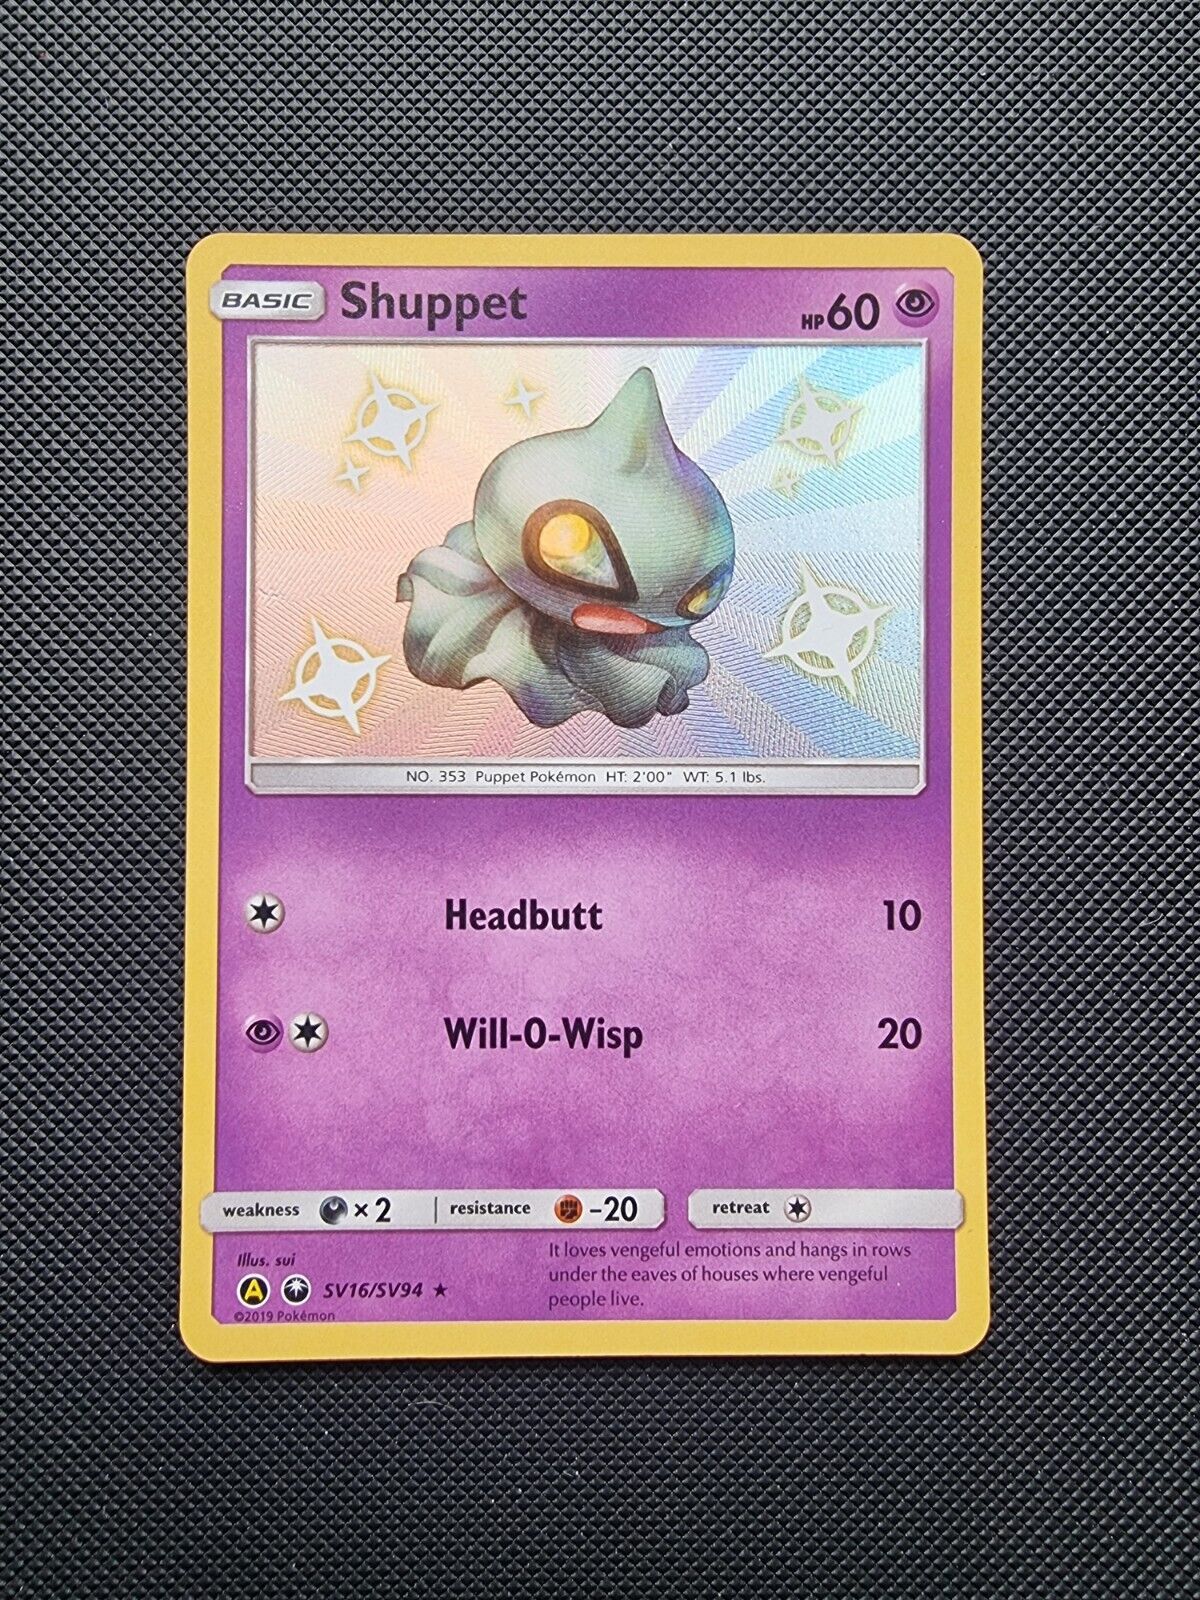 Pokémon TCG Shuppet Hidden Fates SV16/SV94 Holo Shiny Holo Rare